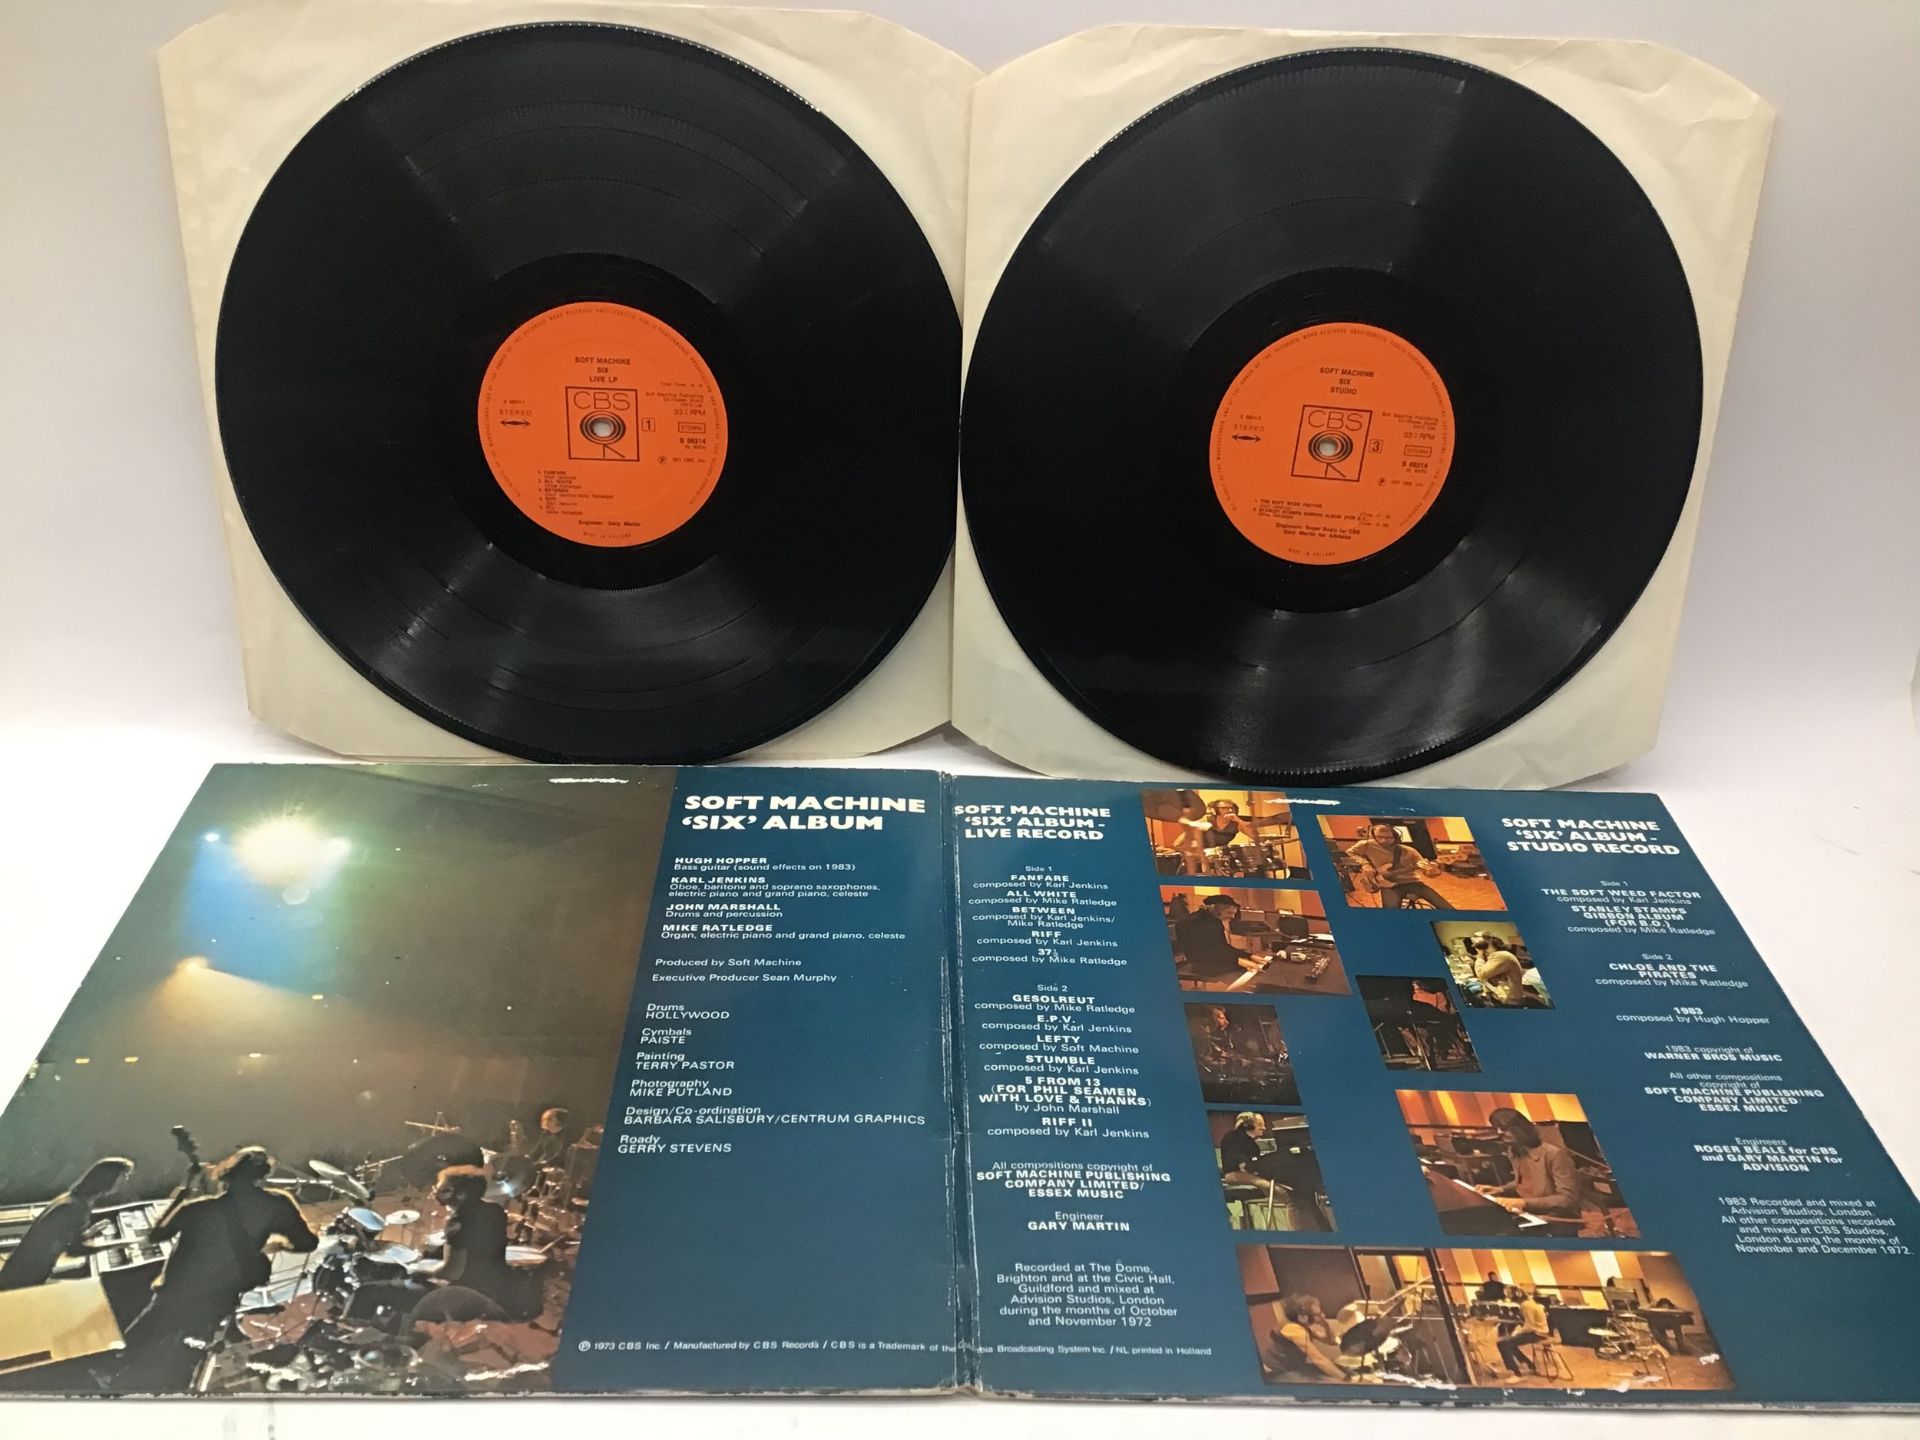 SOFT MACHINE VINYL LP RECORD 'SIX'. Nice original press double album from 1973 on CBS S 68214 - Image 3 of 3